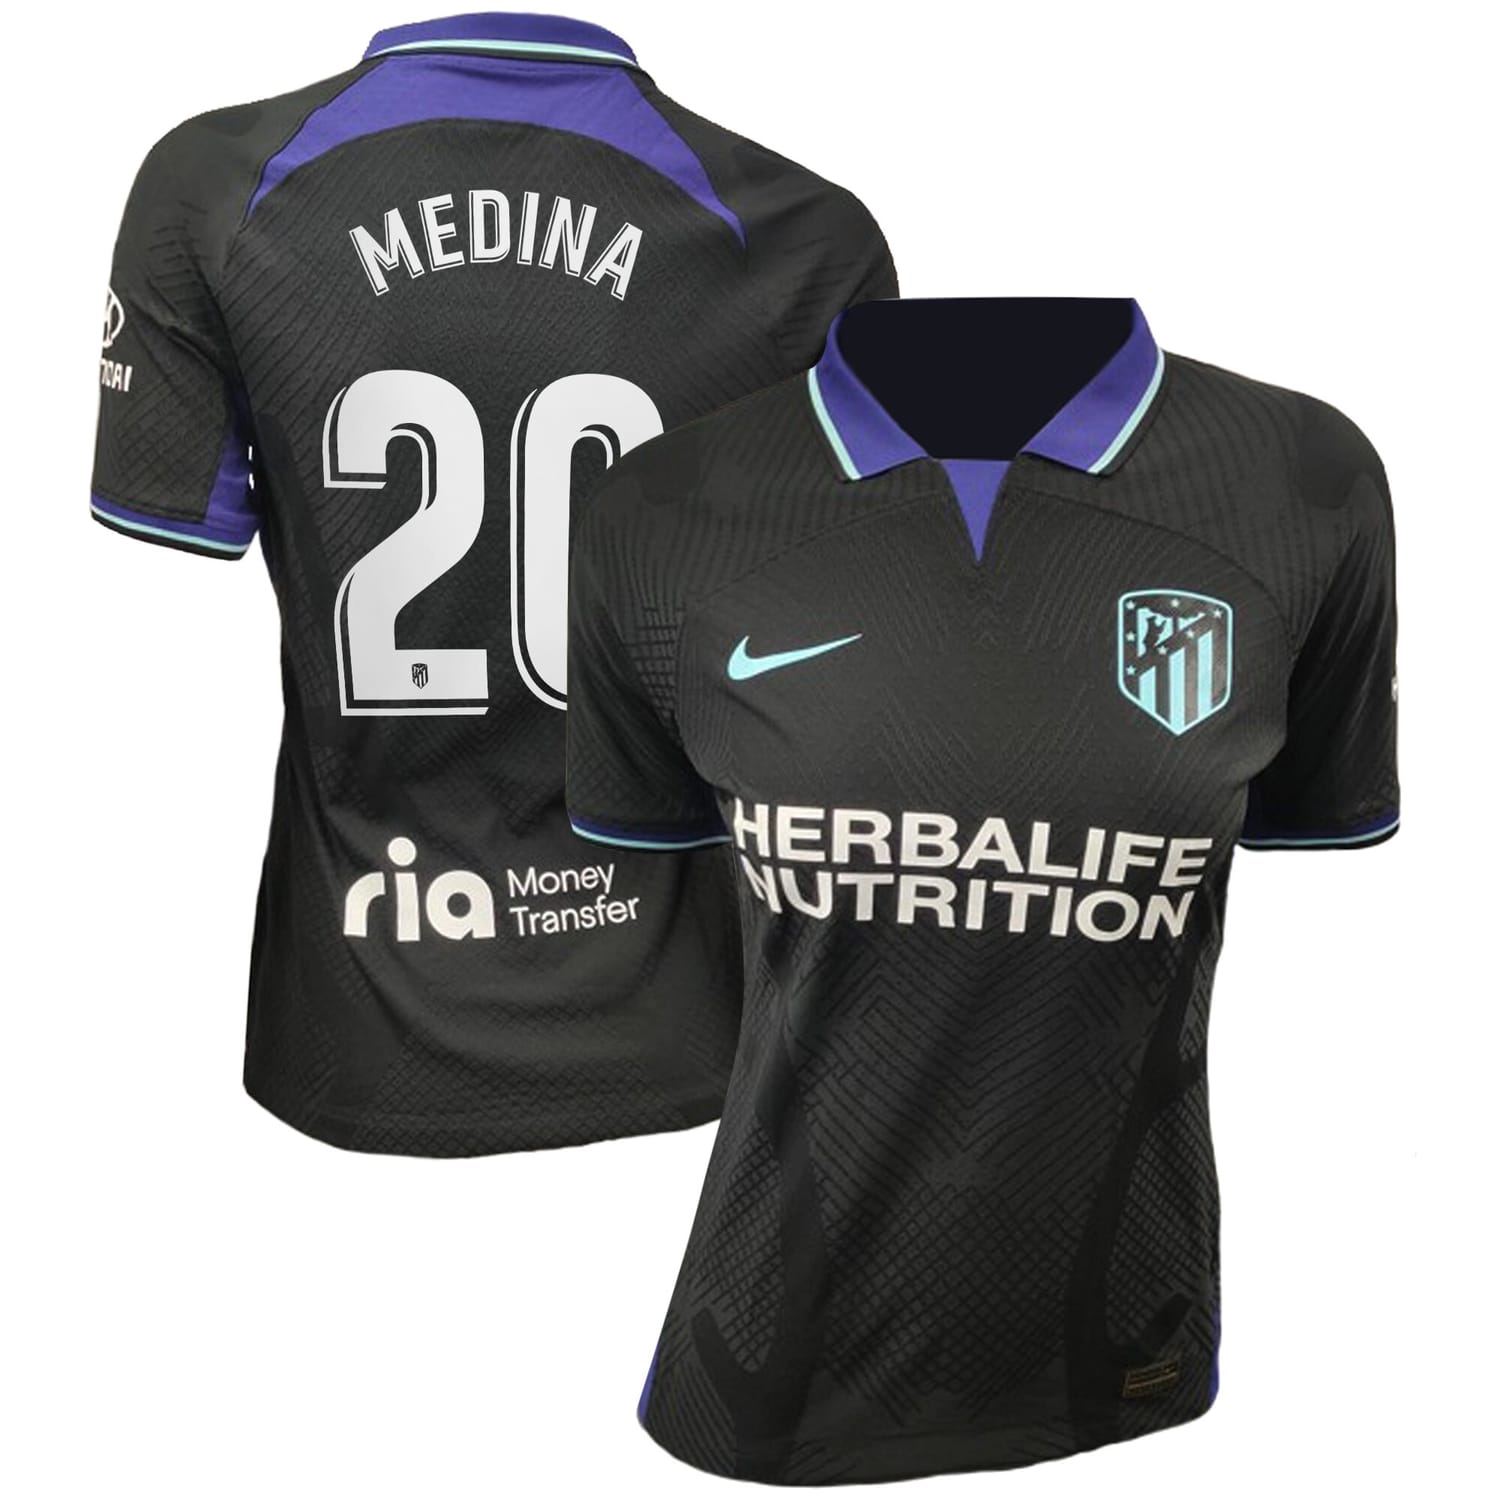 La Liga Atletico de Madrid Away Jersey Shirt 2022-23 player Andrea Medina 20 printing for Women